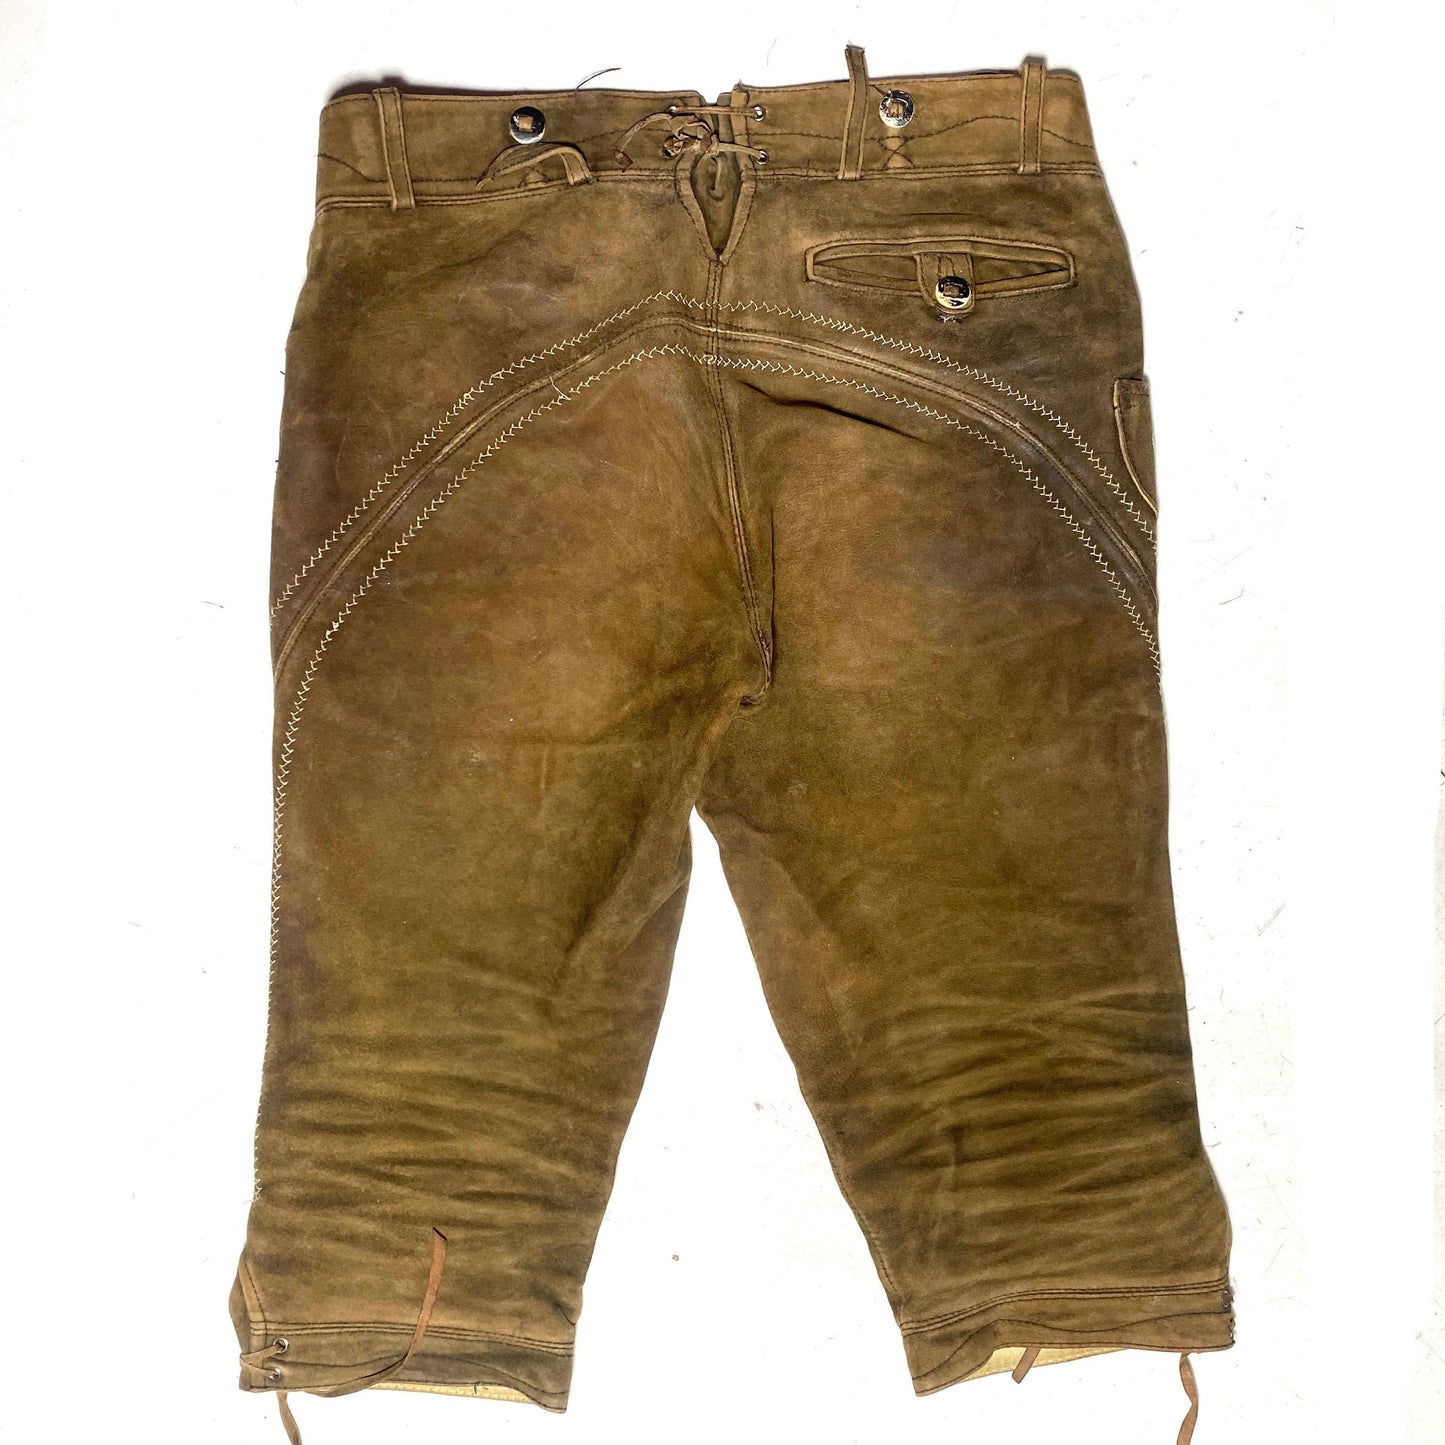 H.Moser trachten leather trousers, traditional German / Tiroler oktoberfest style alpen shorts, size 44